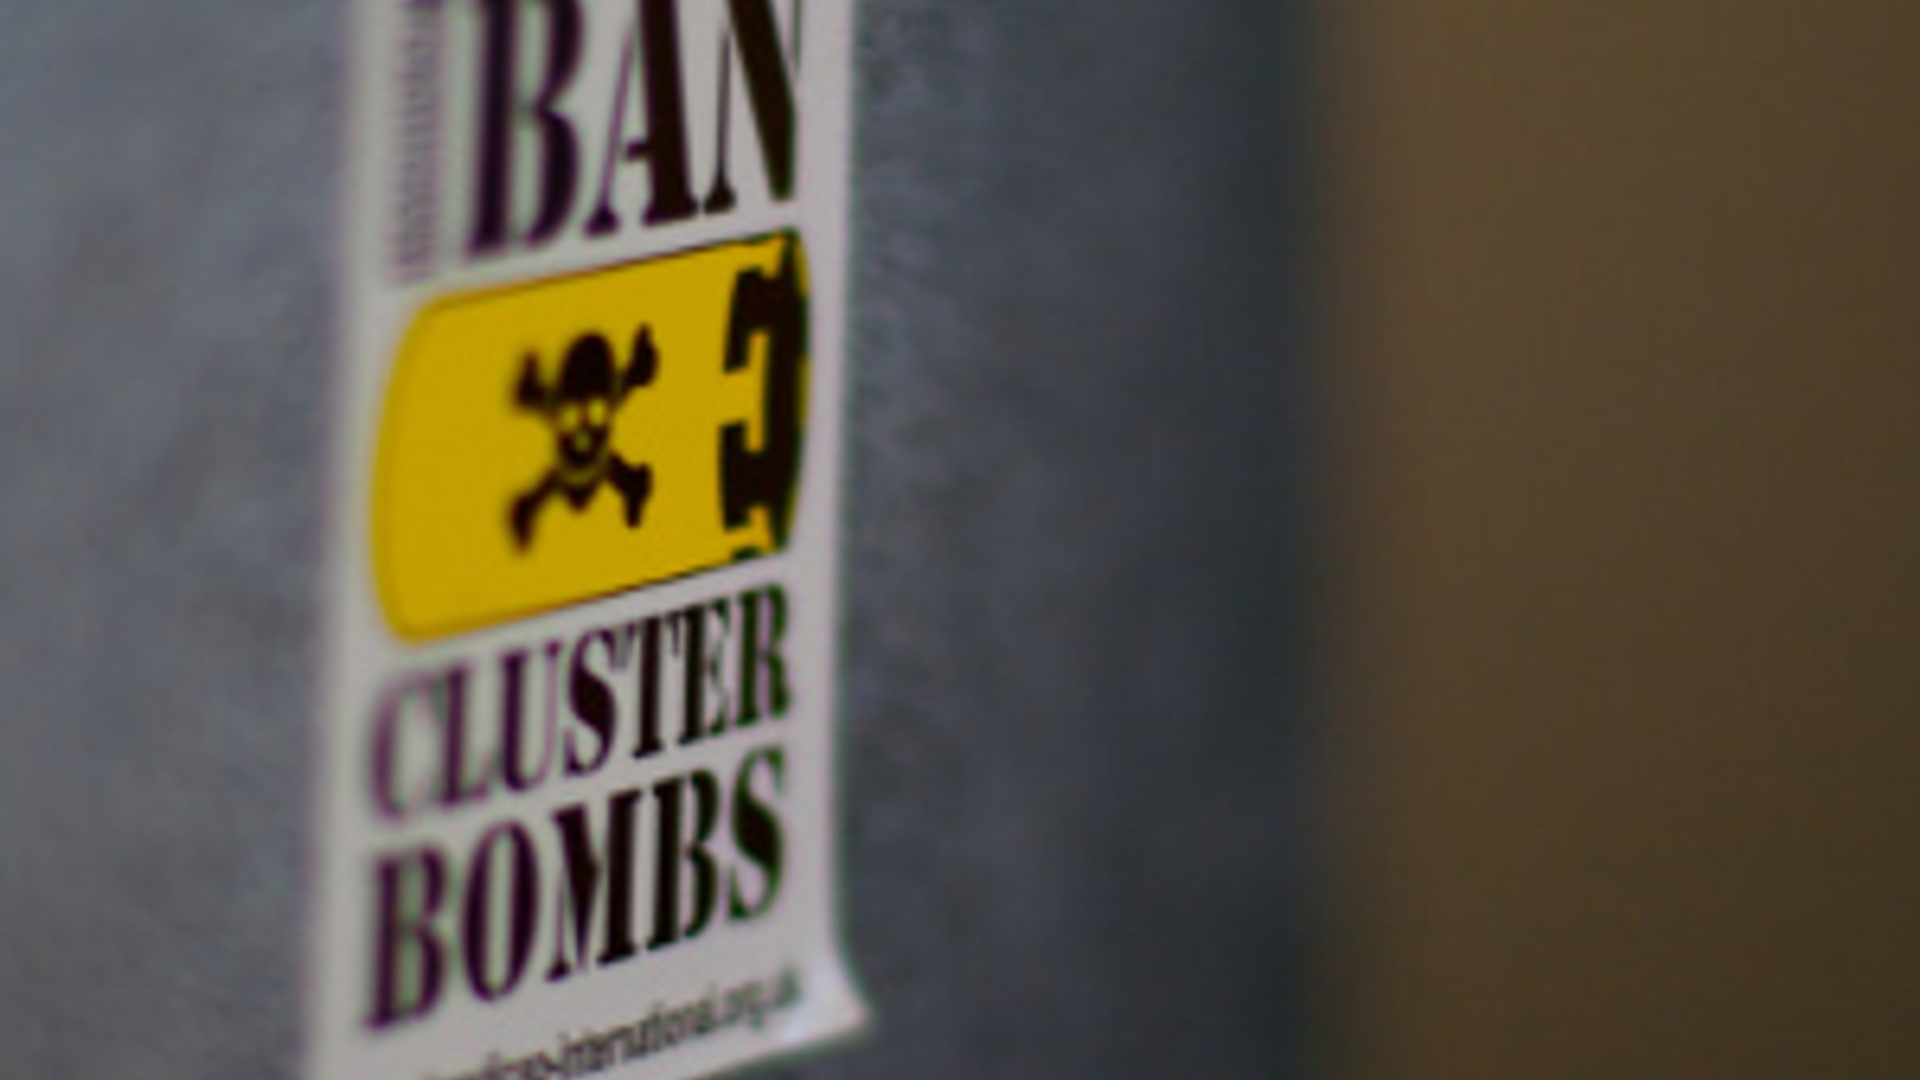 ban-cluster-bombs-300px.jpg